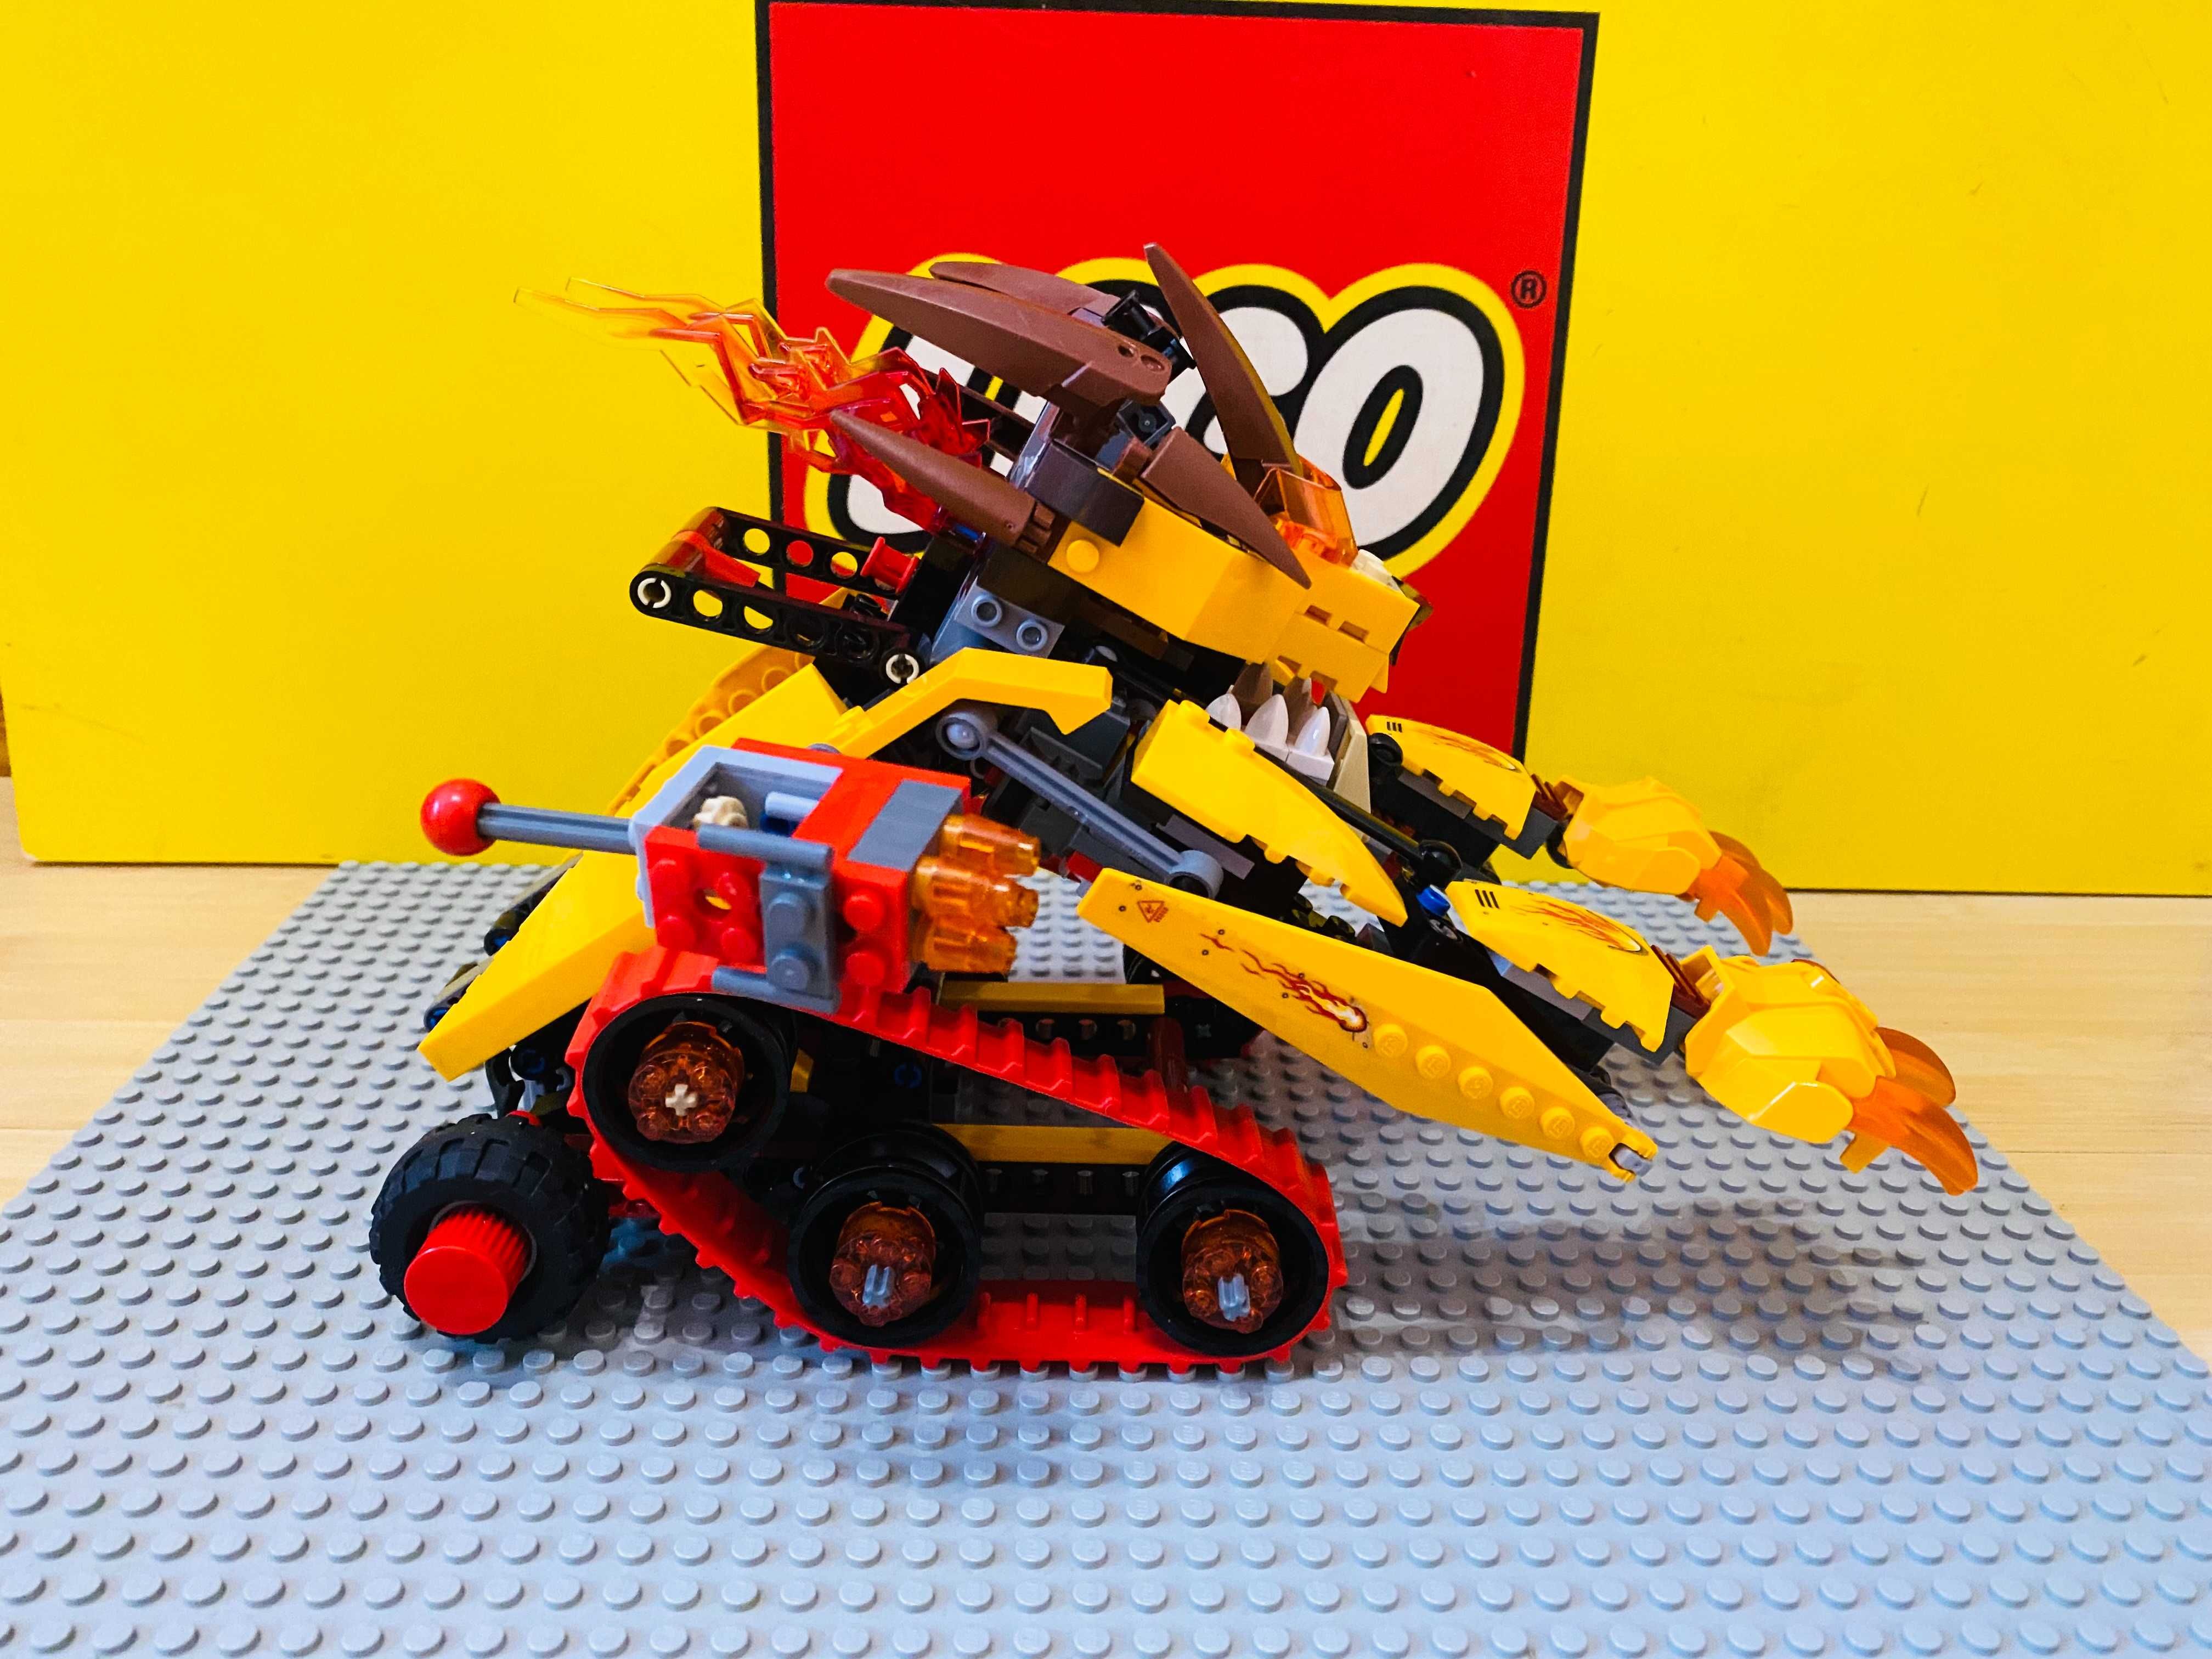 LEGO CHIMA 70144 LAVAL'S FIRE LION Ognisty Pojazd Lavala LEW klocki